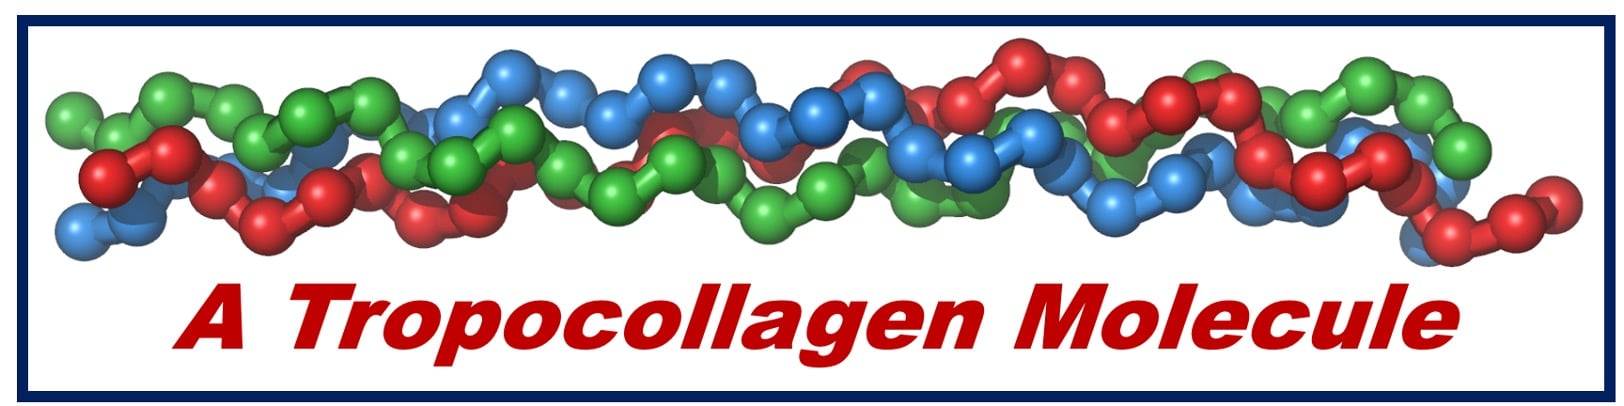 Collagen - a tropocollagen molecule